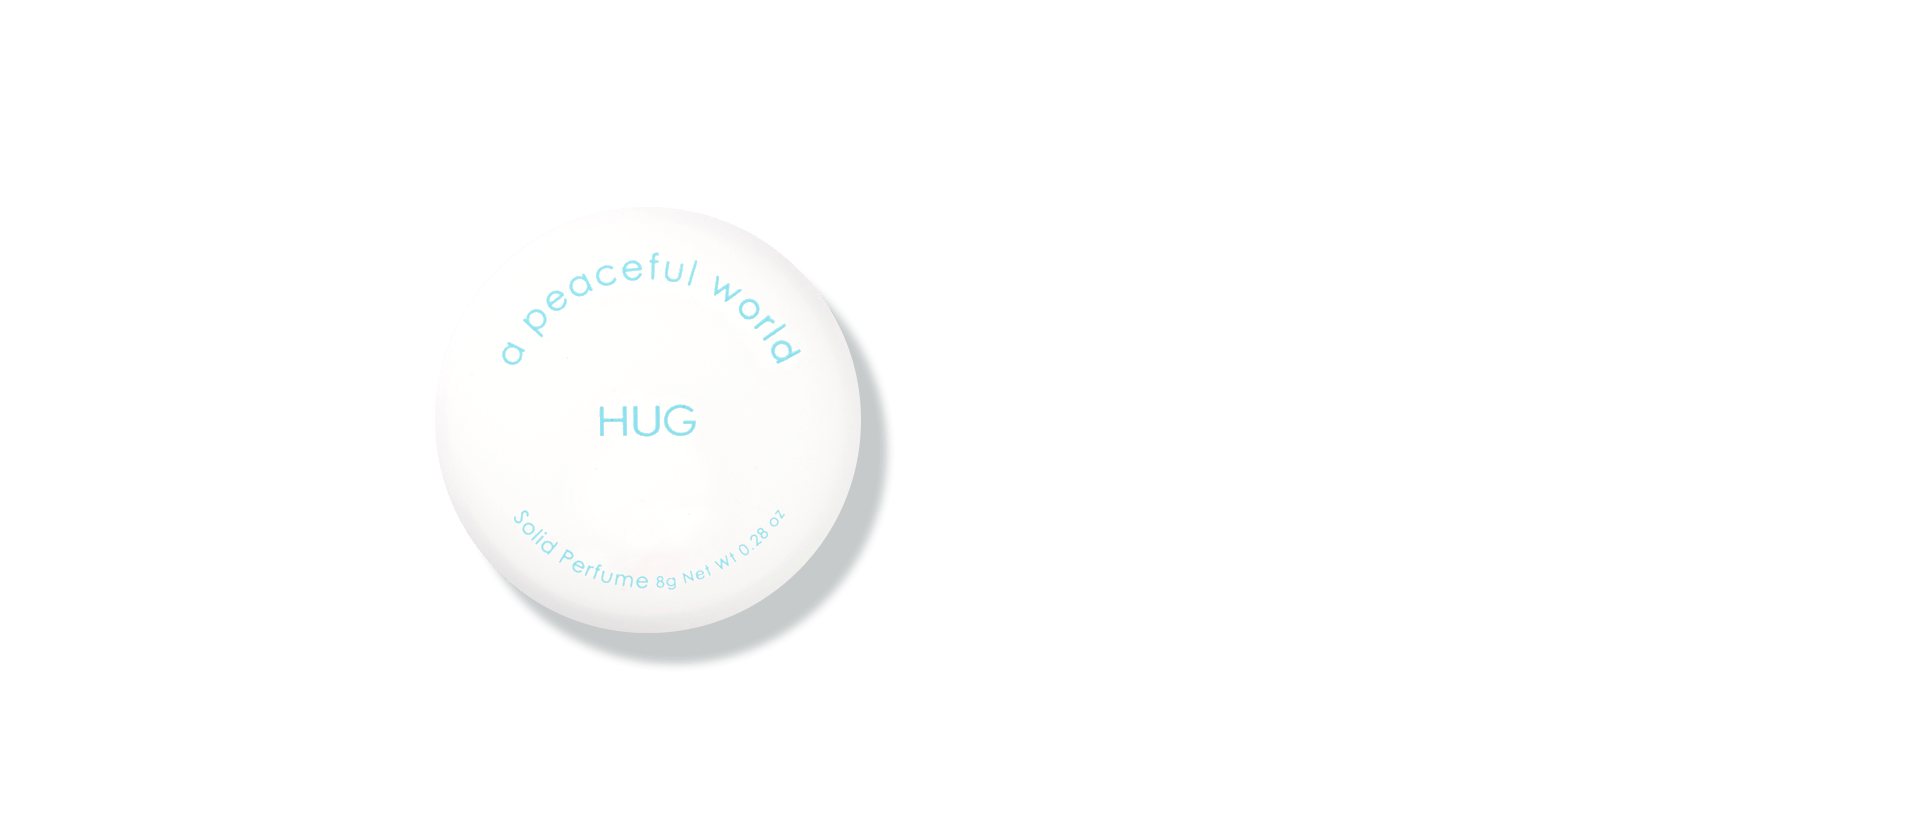 a peaceful world HUG